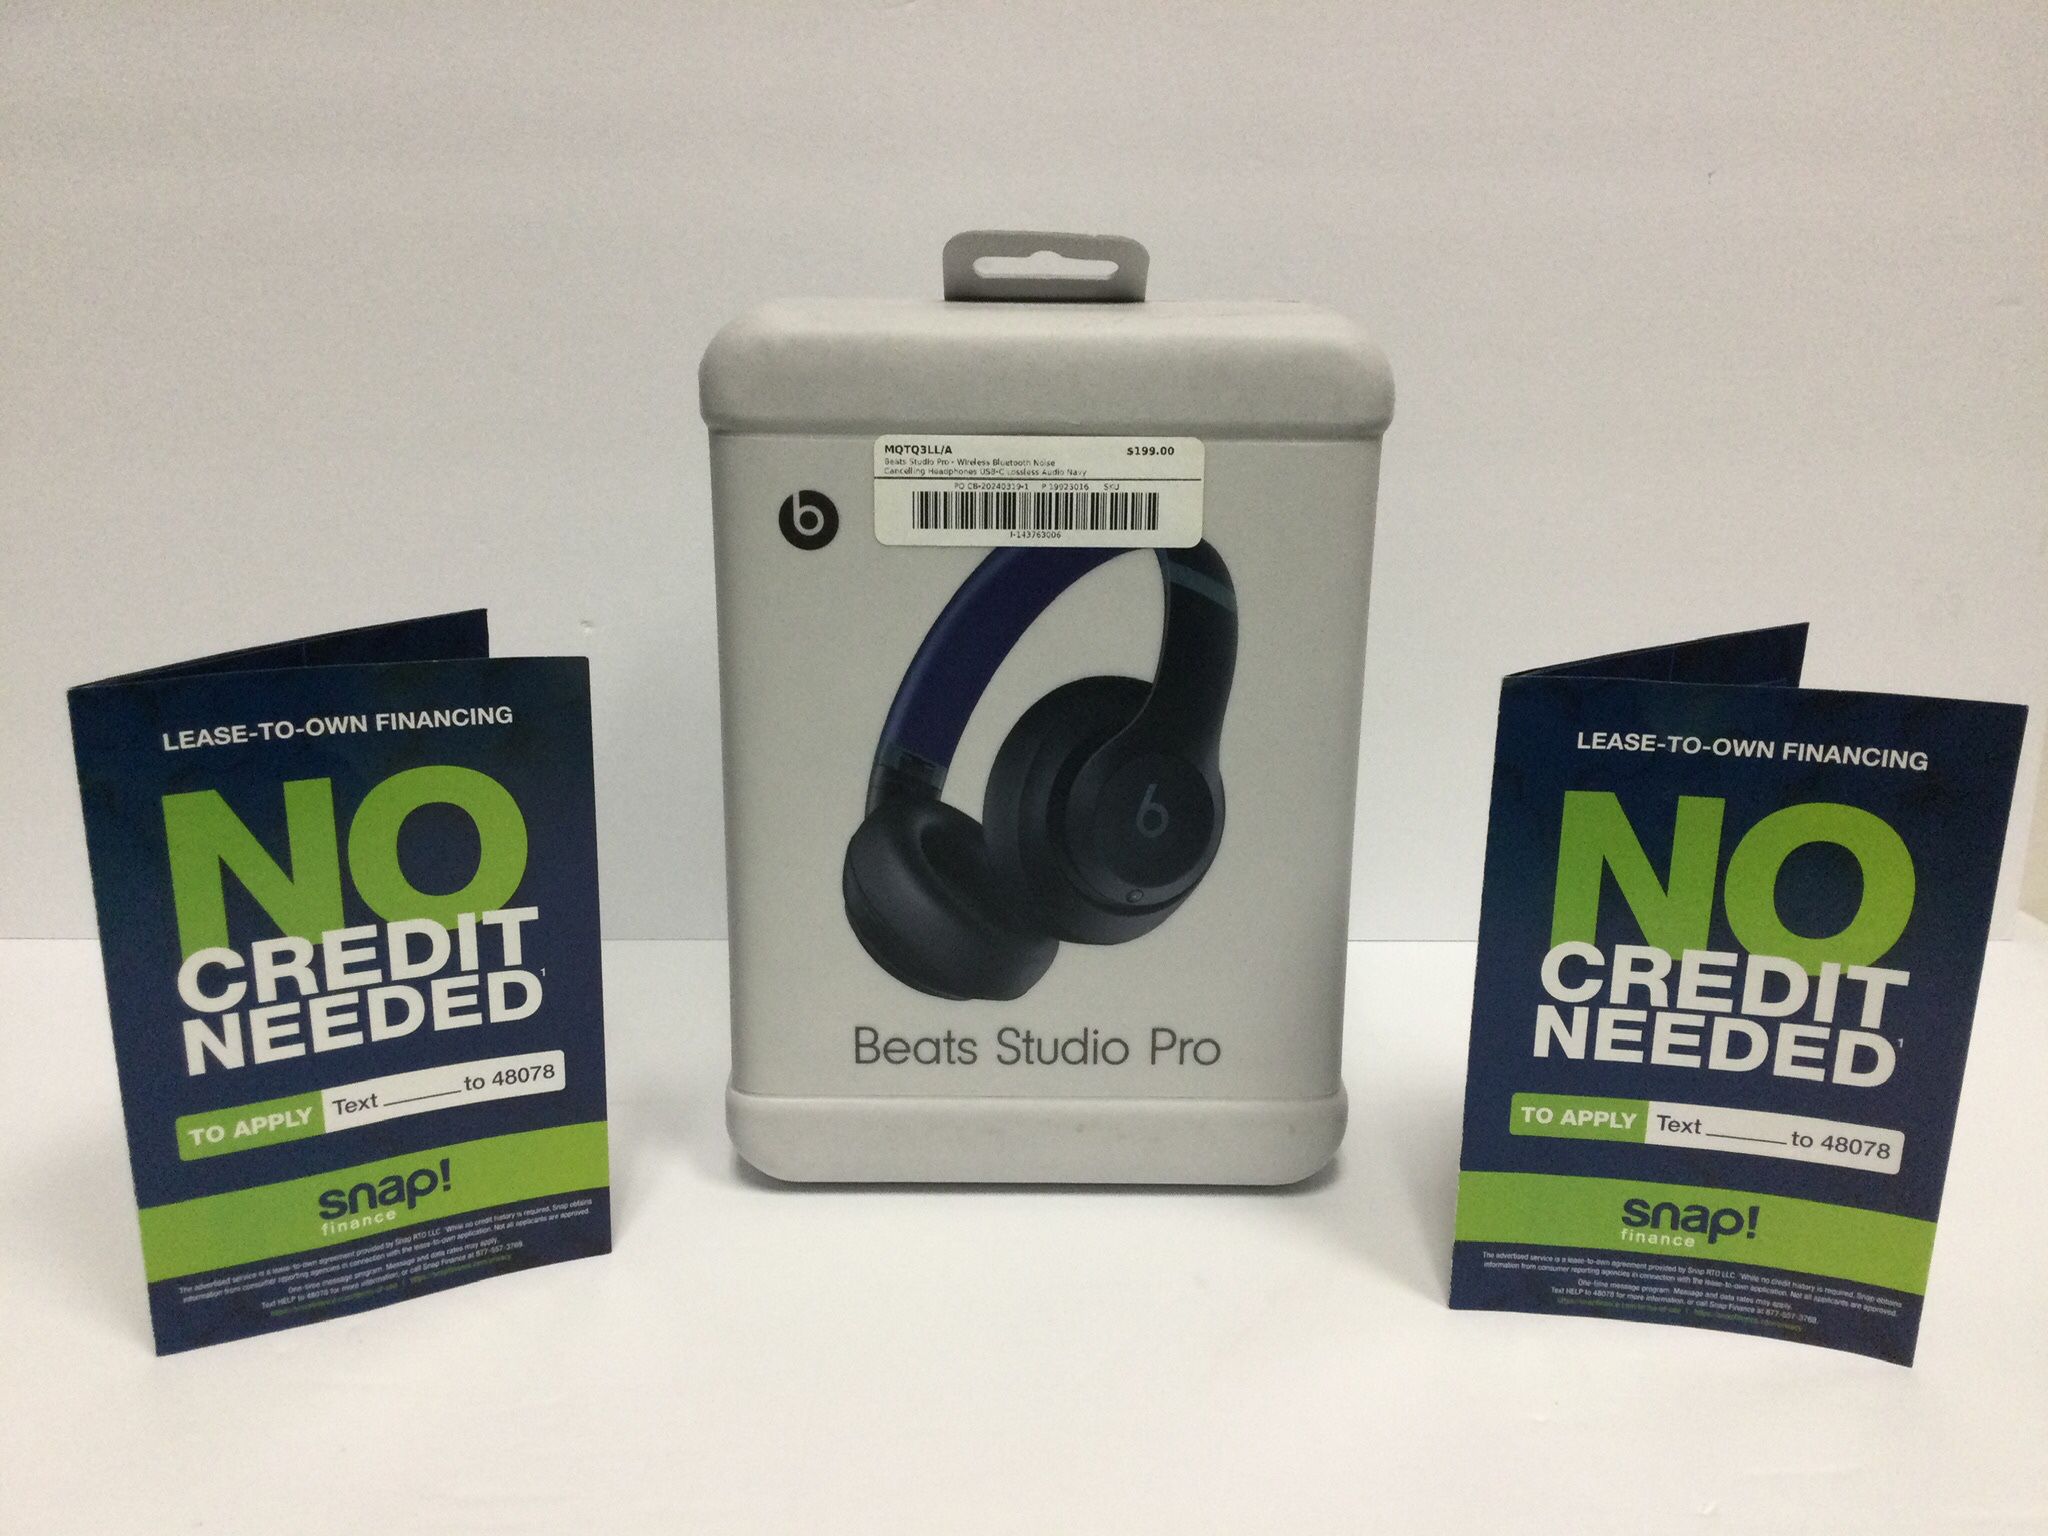 Beats Studio Pro - Wireless Bluetooth Noise Cancelling Headphones, Navy - $199